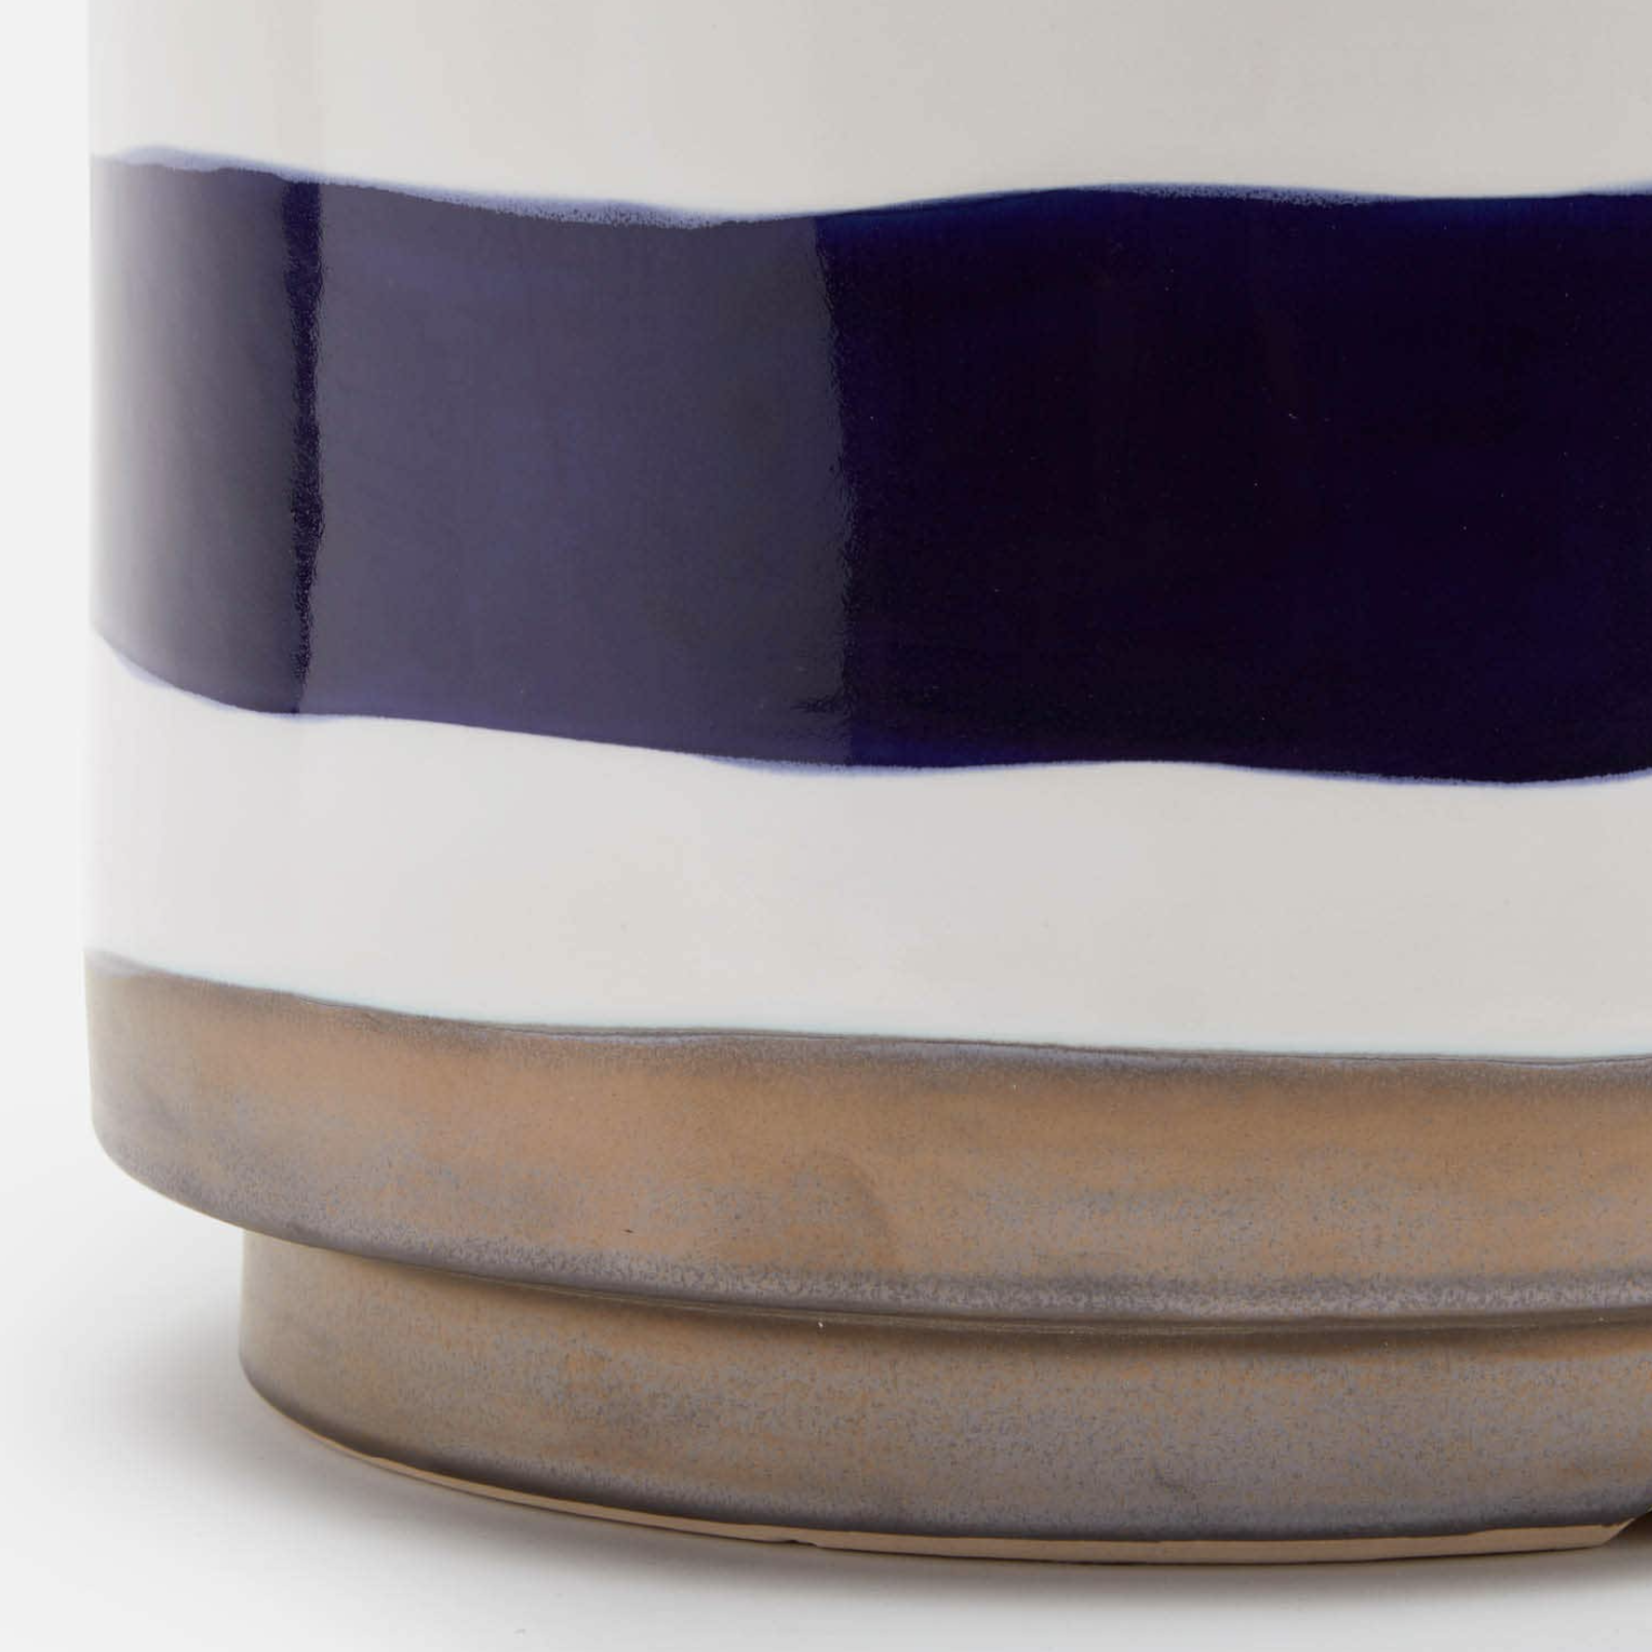 Outside The Box 14x19 Made Goods Belda White & Blue Striped Ceramic Stool